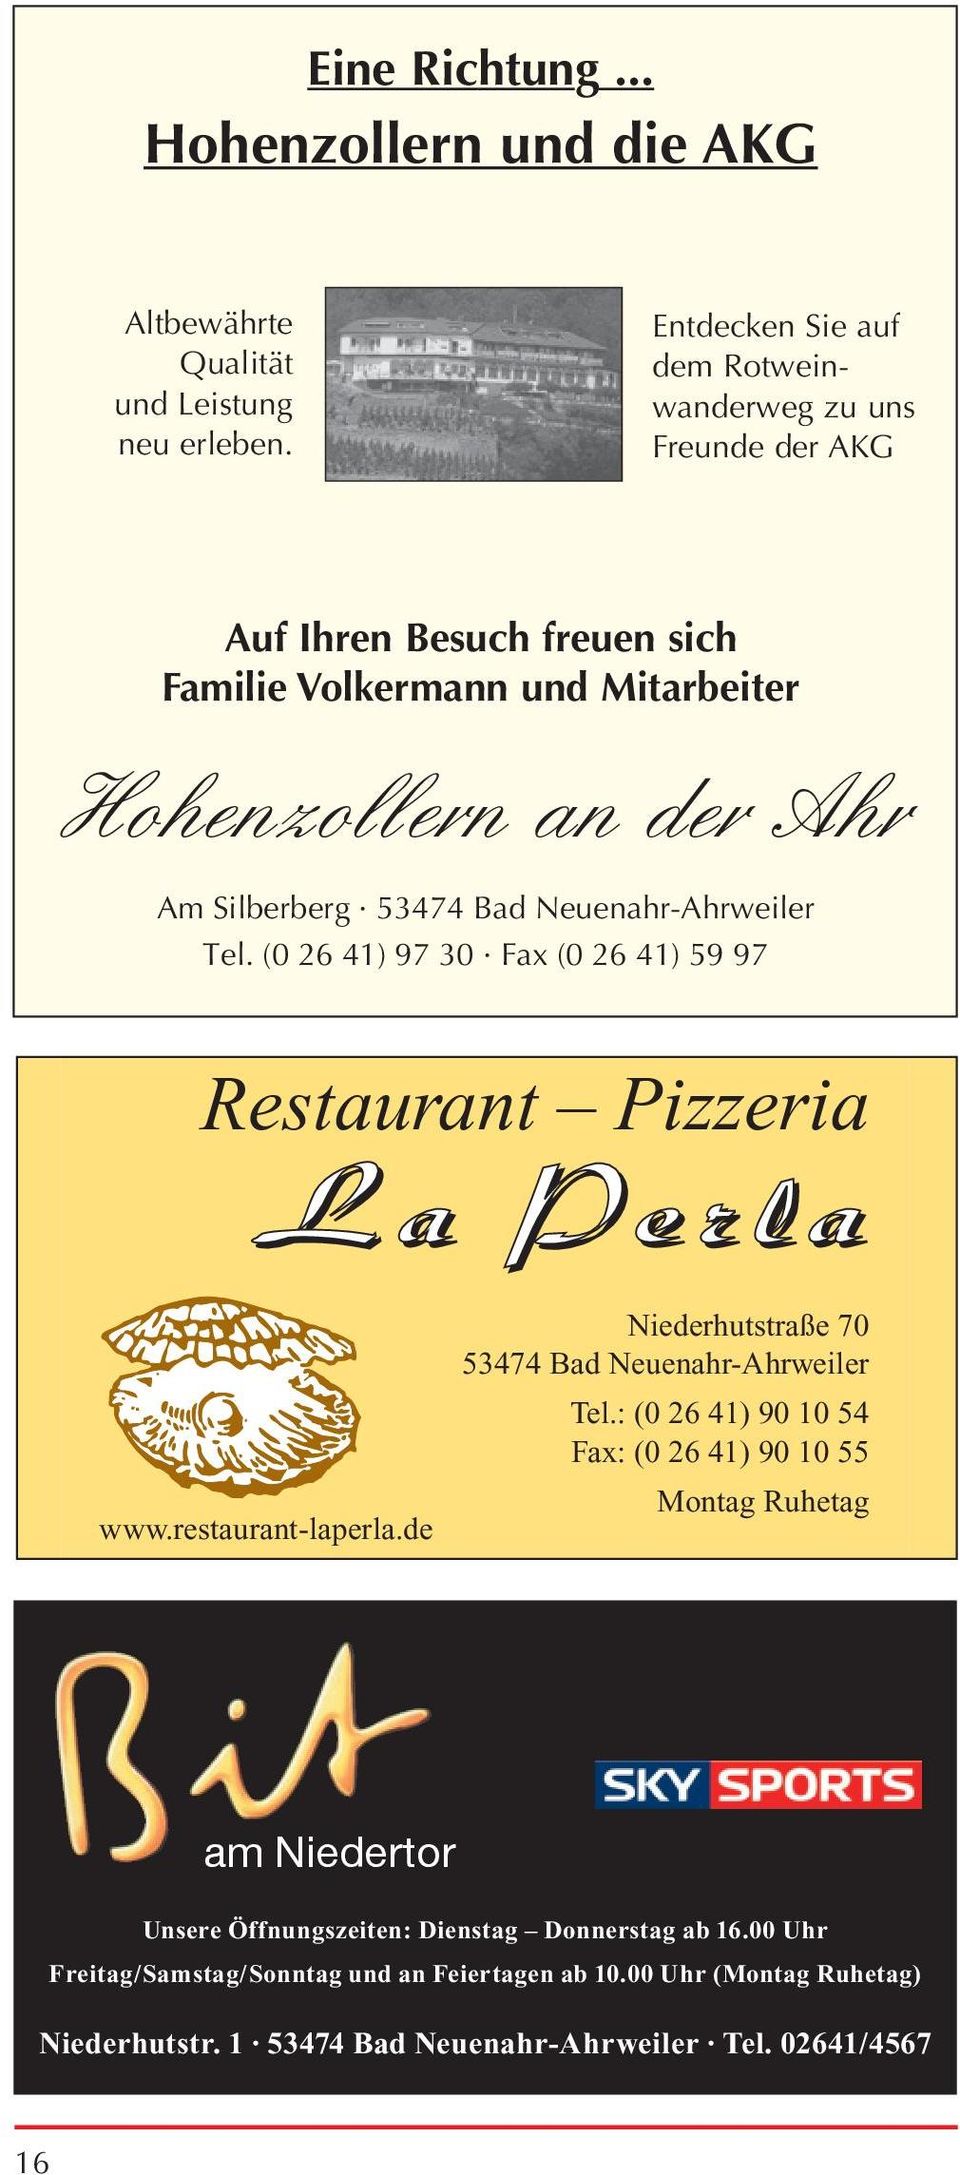 Silberberg 53474 Bad Neuenahr-Ahrweiler Tel. (0 26 41) 97 30 Fax (0 26 41) 59 97 Tel. (0 26 41) 42 68 ISDN 97 30 Fax (0 26 41) 59 97 Restaurant Pizzeria www.restaurant-laperla.